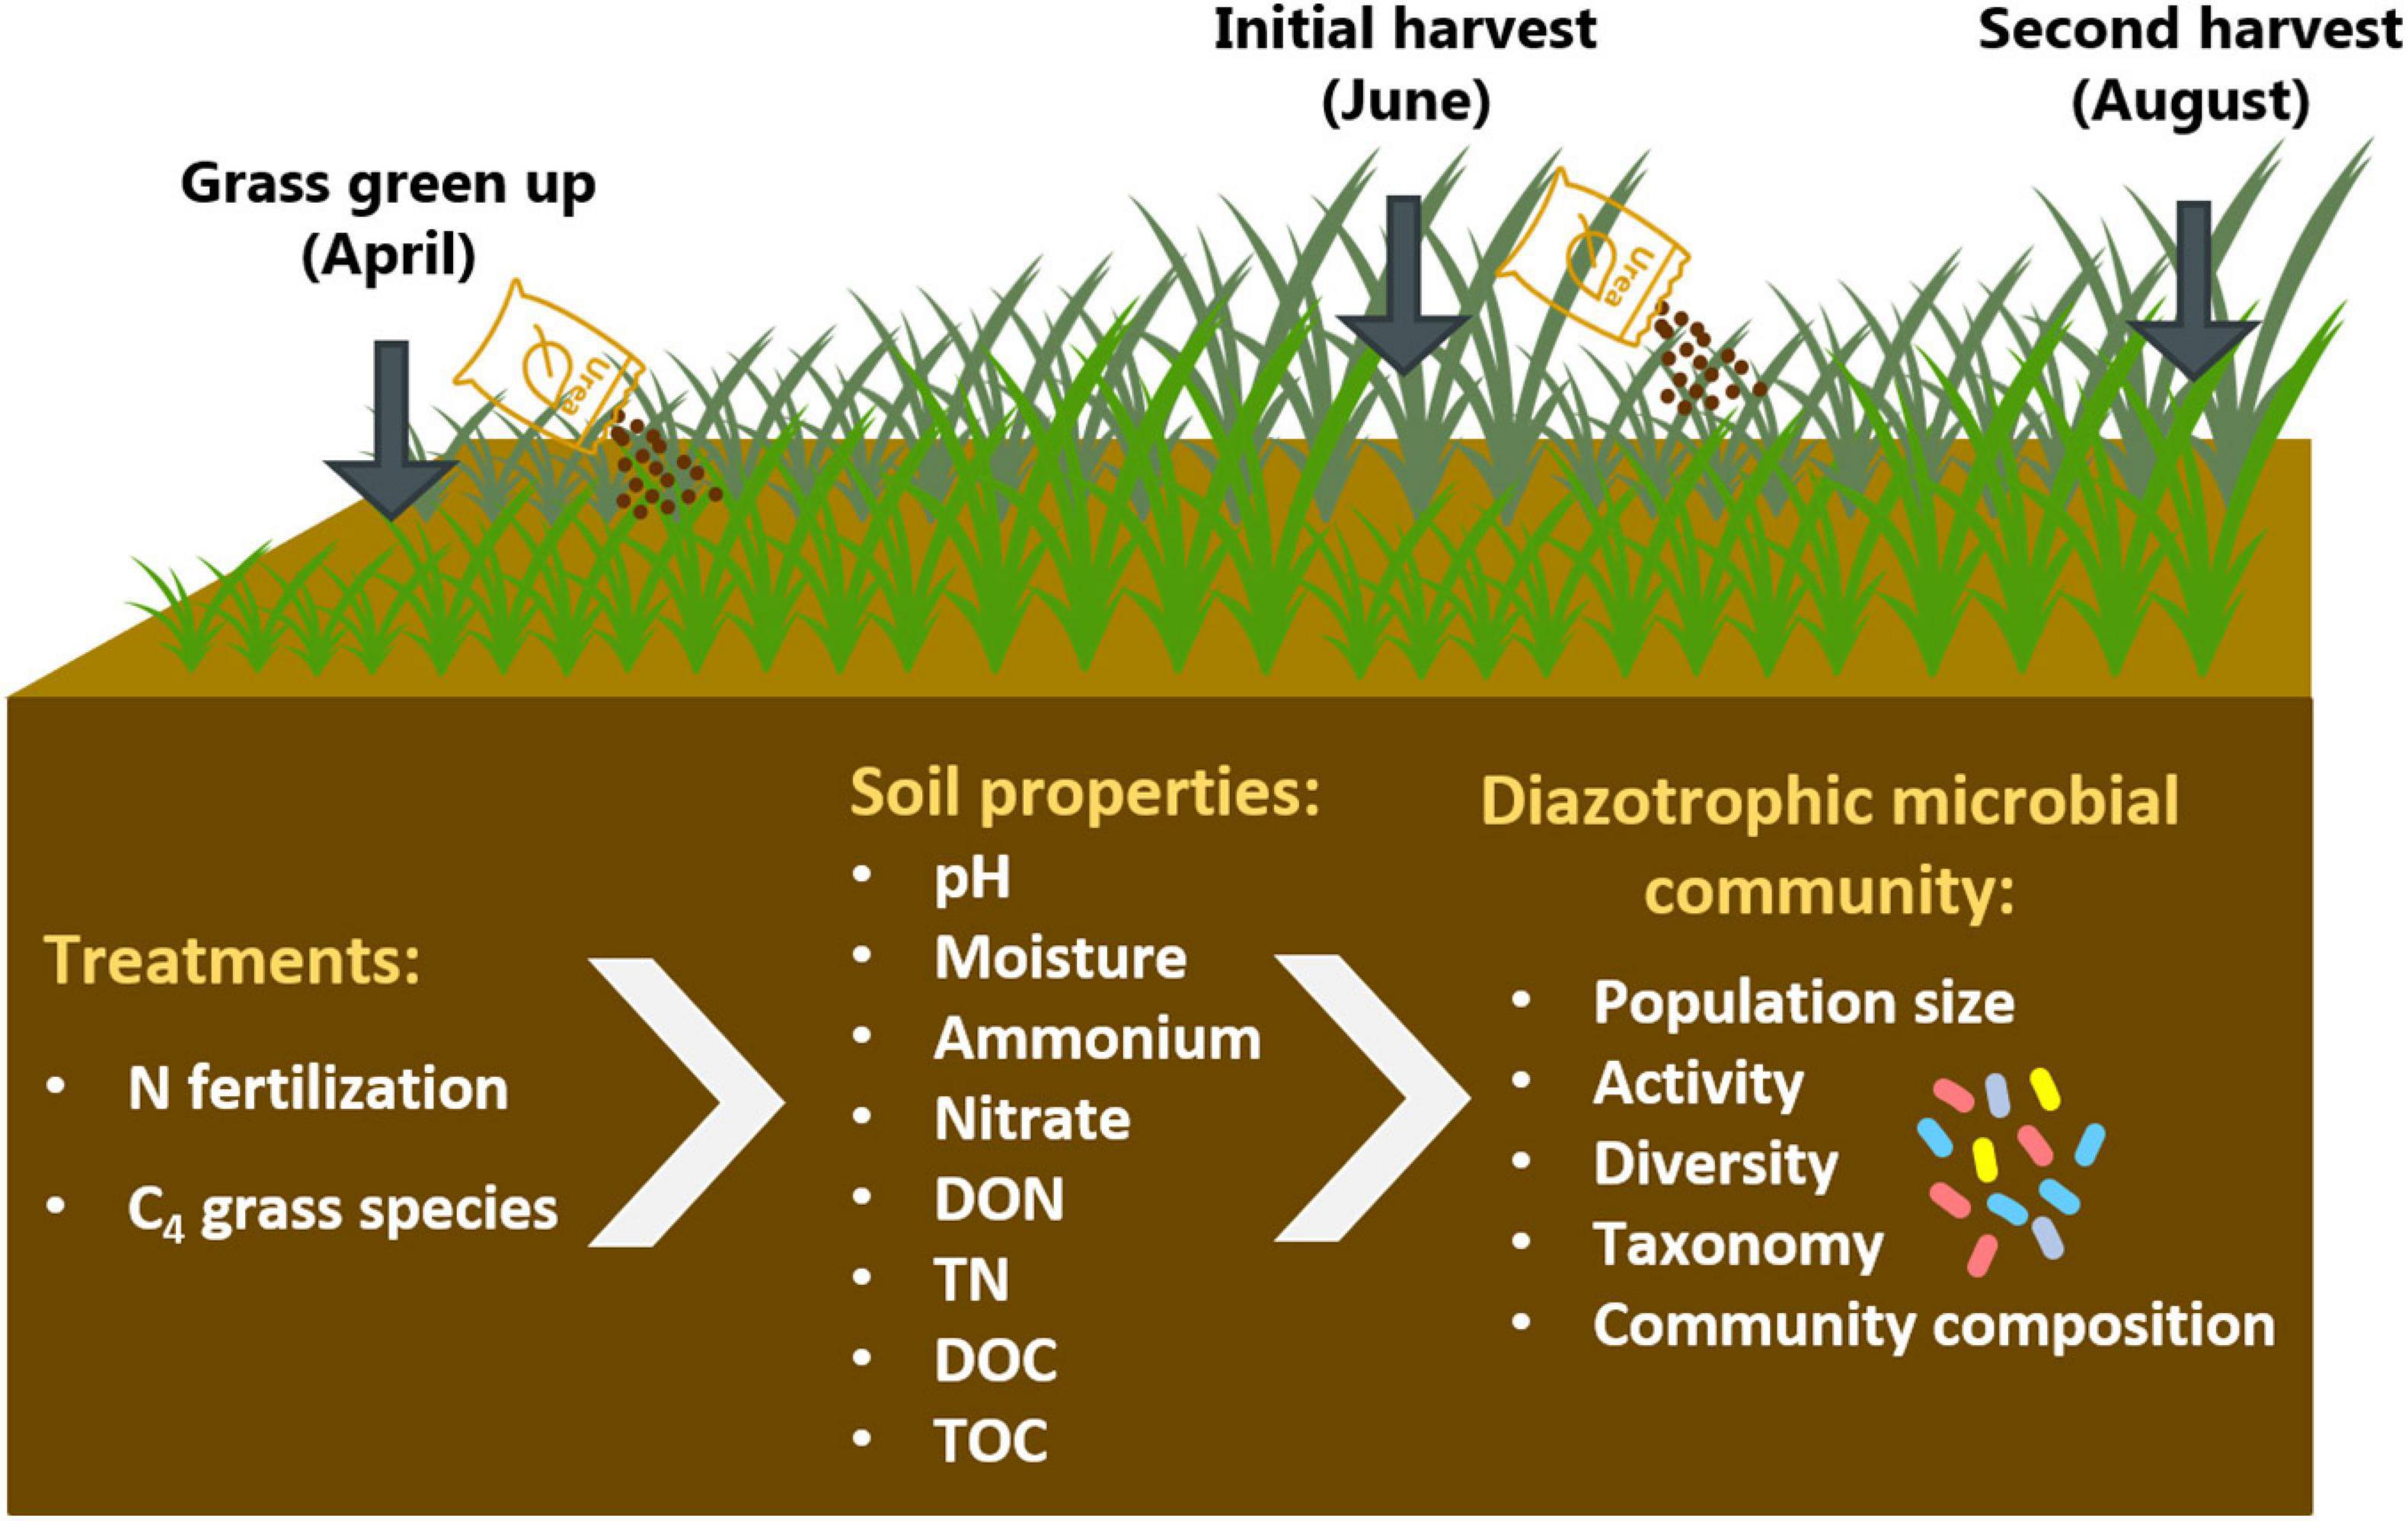 Frontiers | Nitrogen Fertilization and Native C4 Grass Species